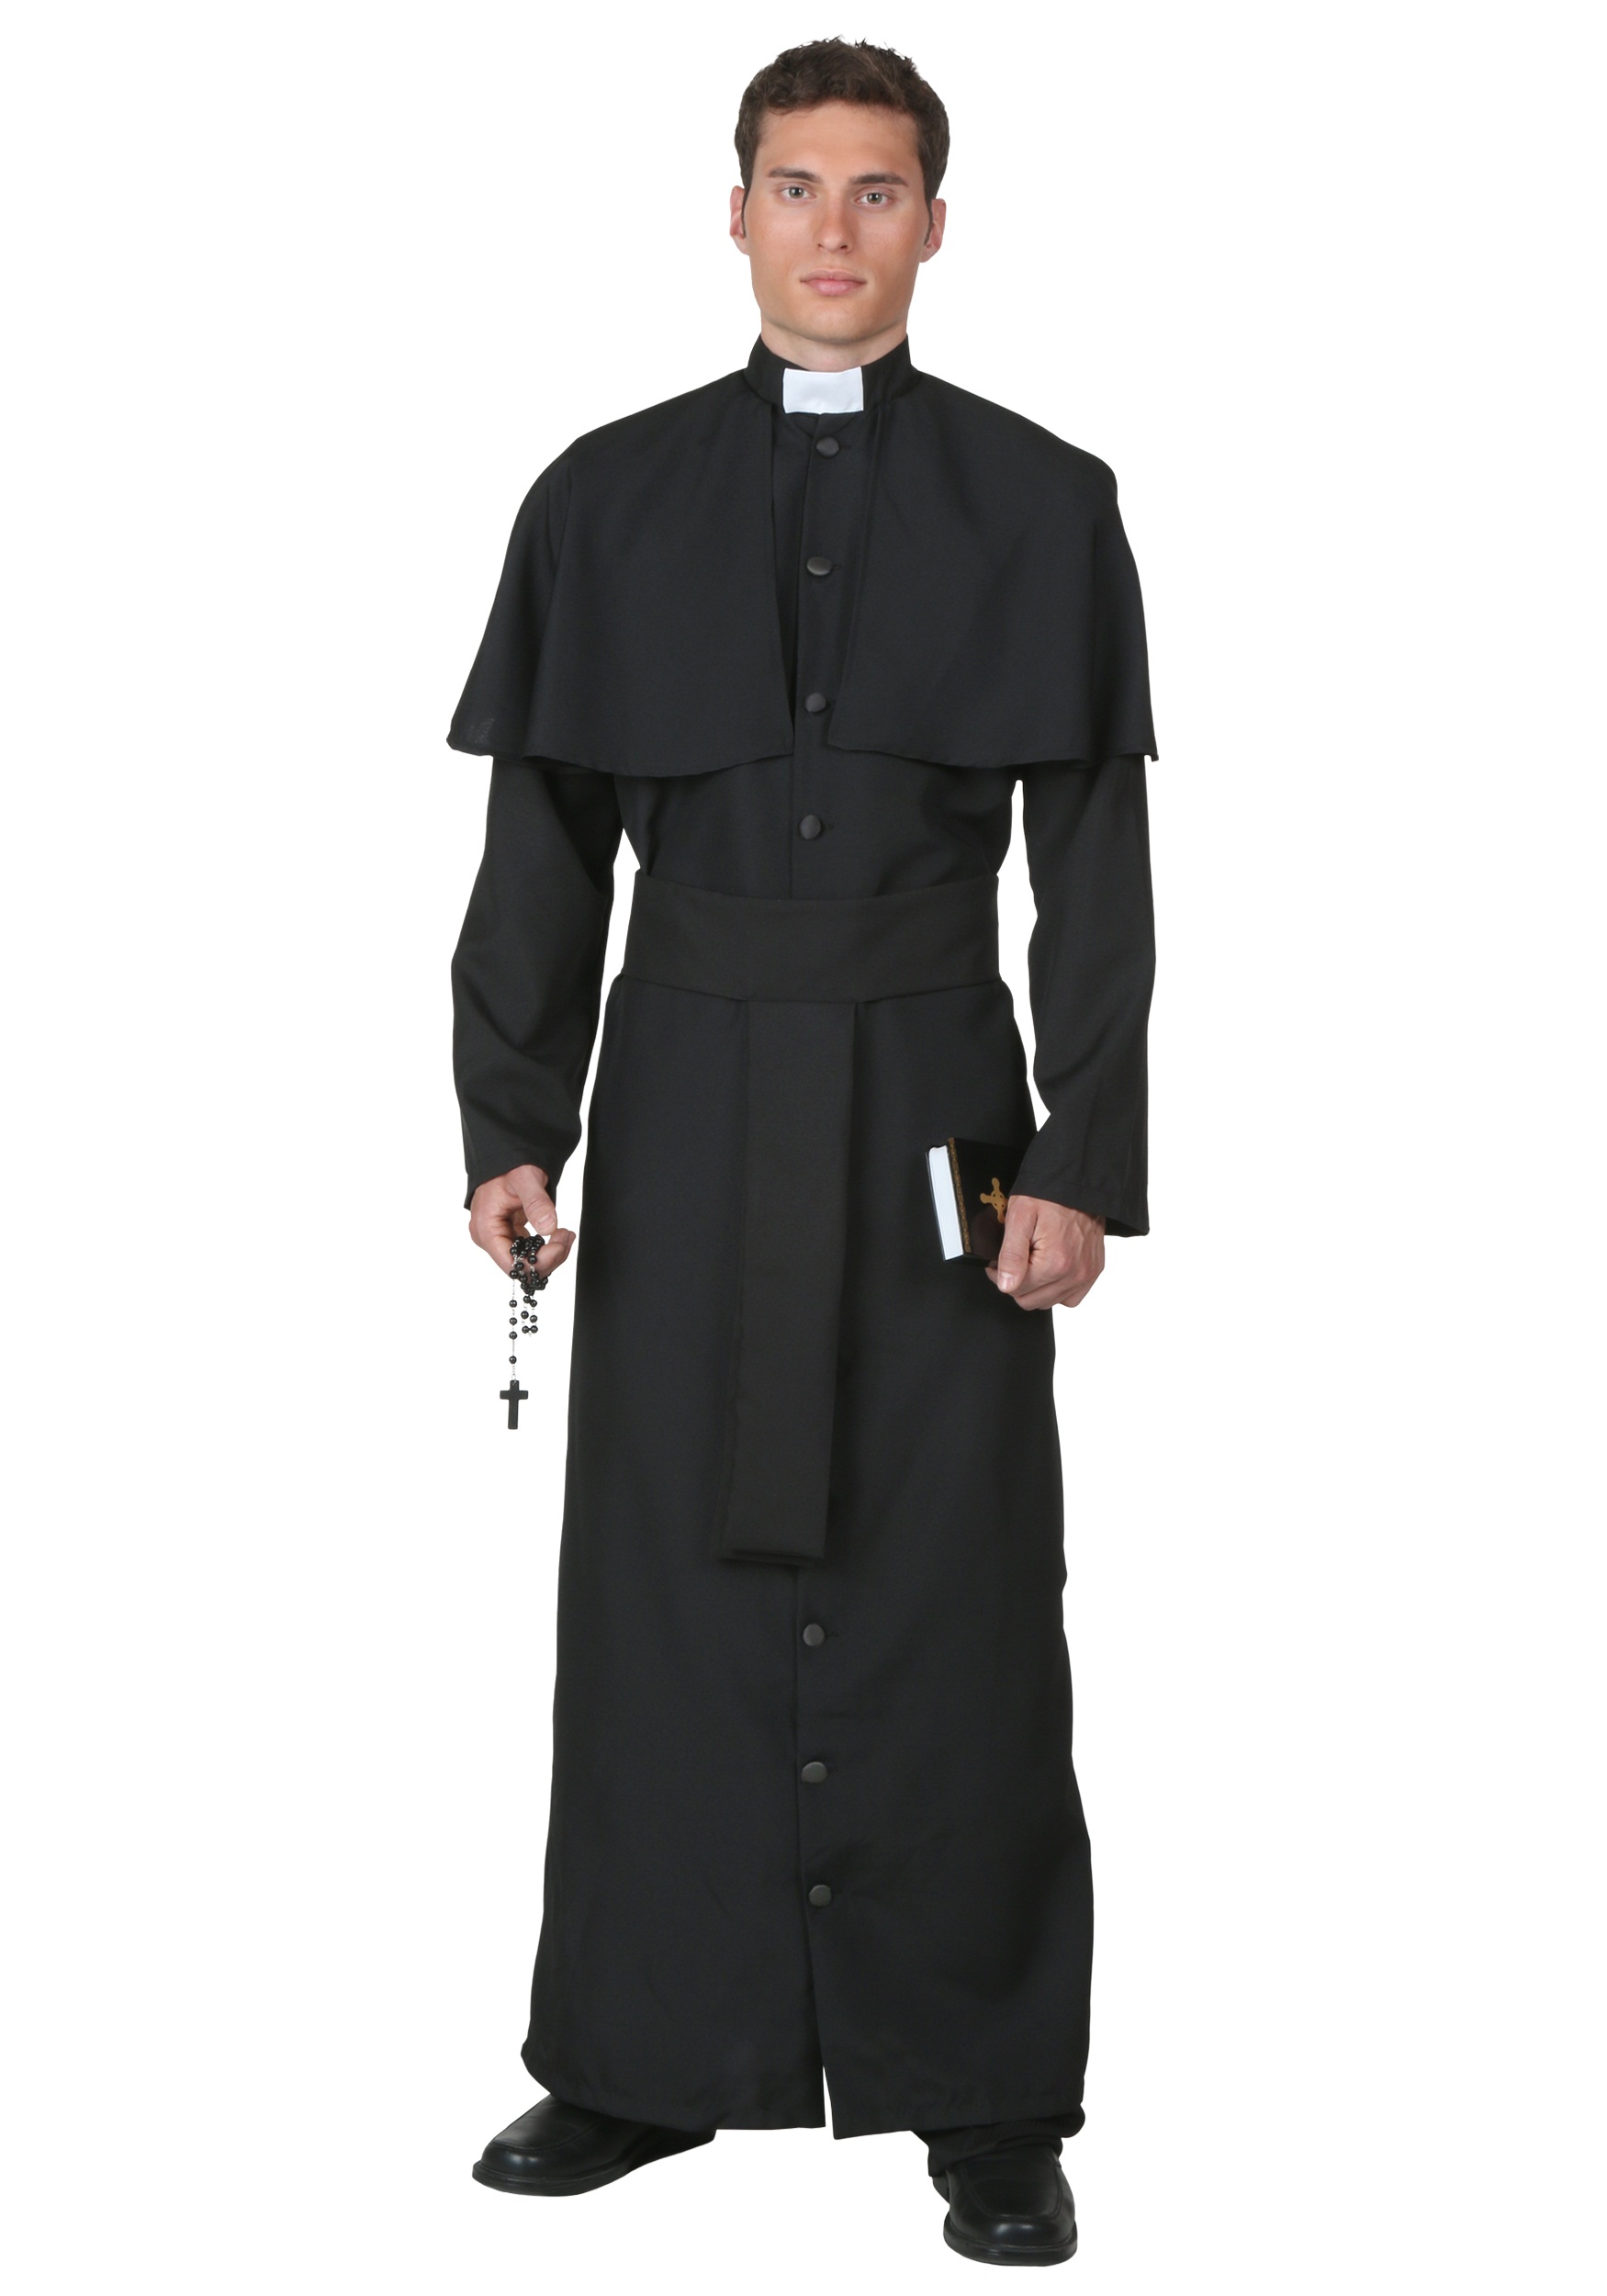 Image of Deluxe Priest Costume | Religious Men's Costumes | Exclusive ID FUN2934AD-XL